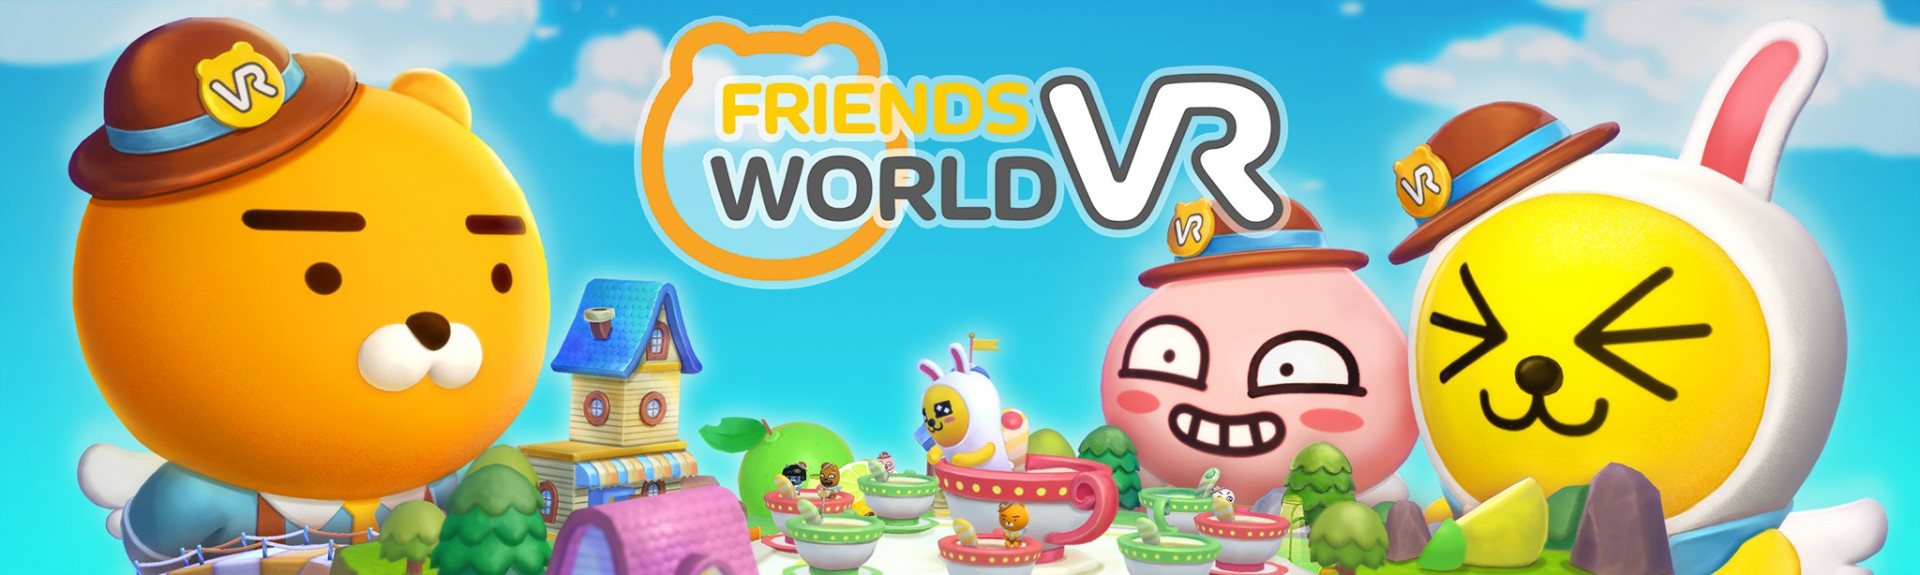 Friends VR World